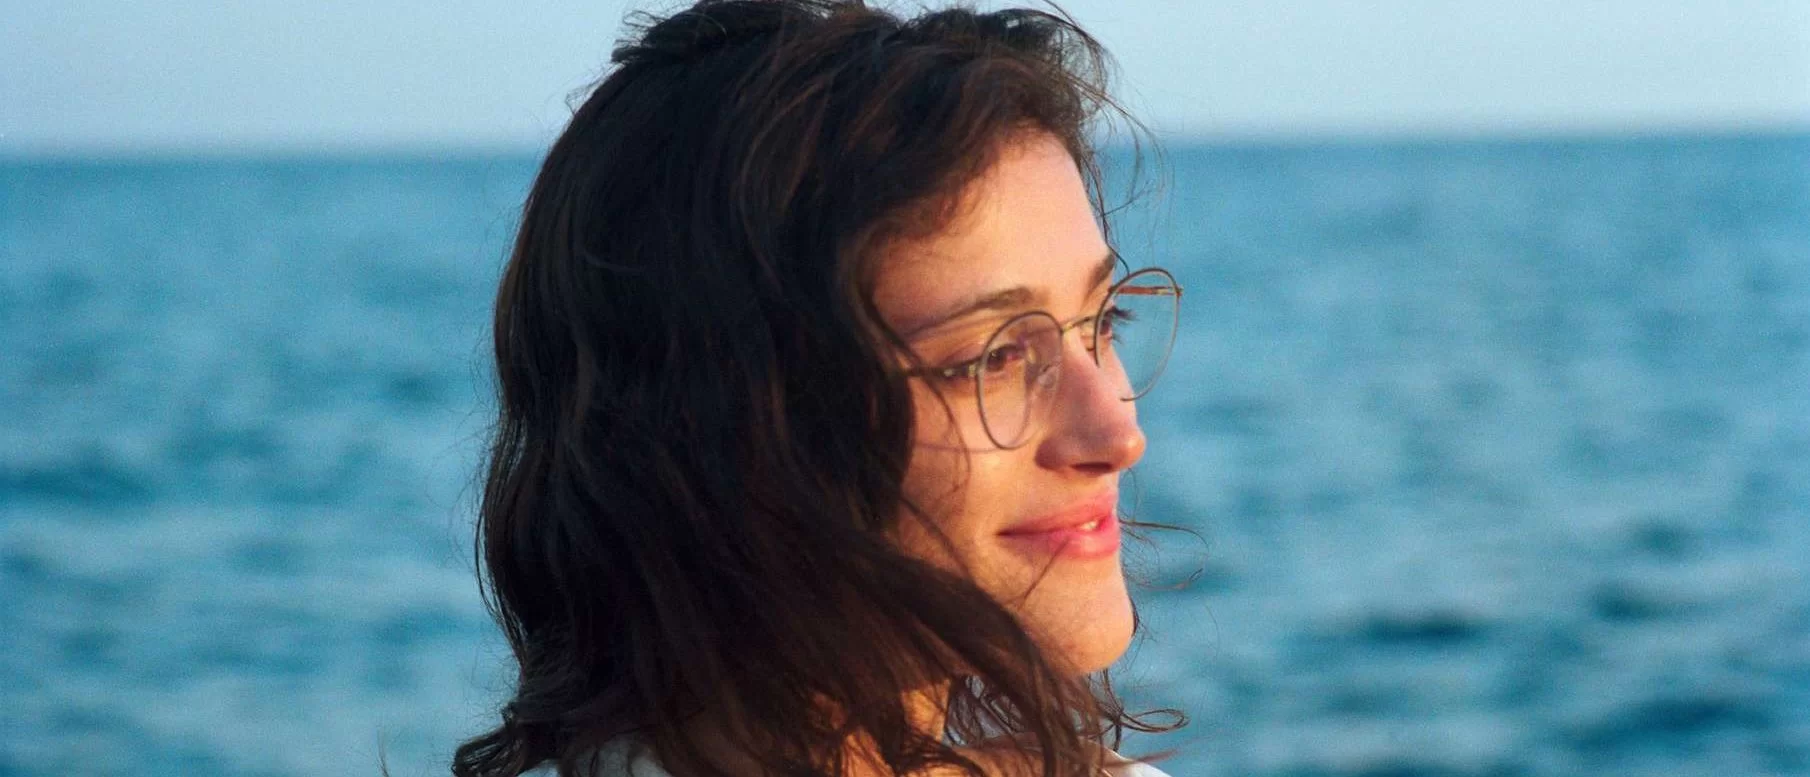 Brillenmarke Mykita - Frau mit runder Brille vor Meer